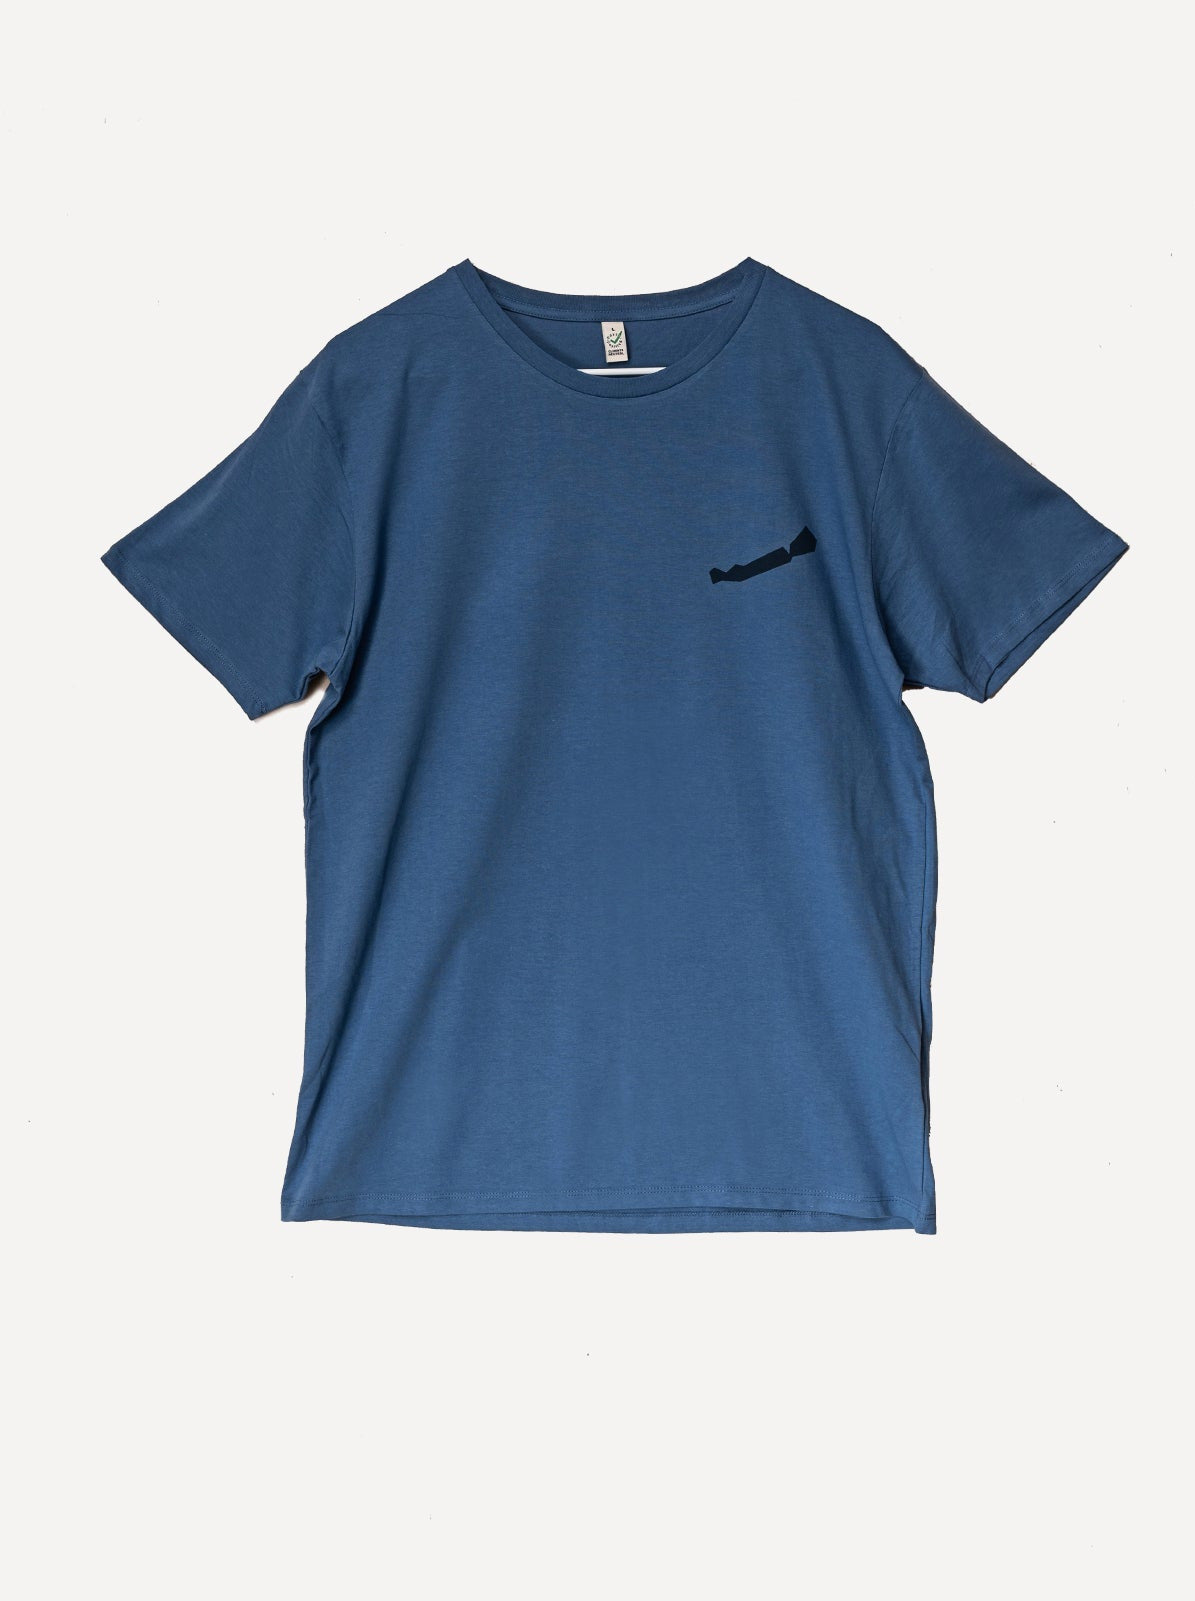 Blue men's t-shirt with Balaton circle pattern